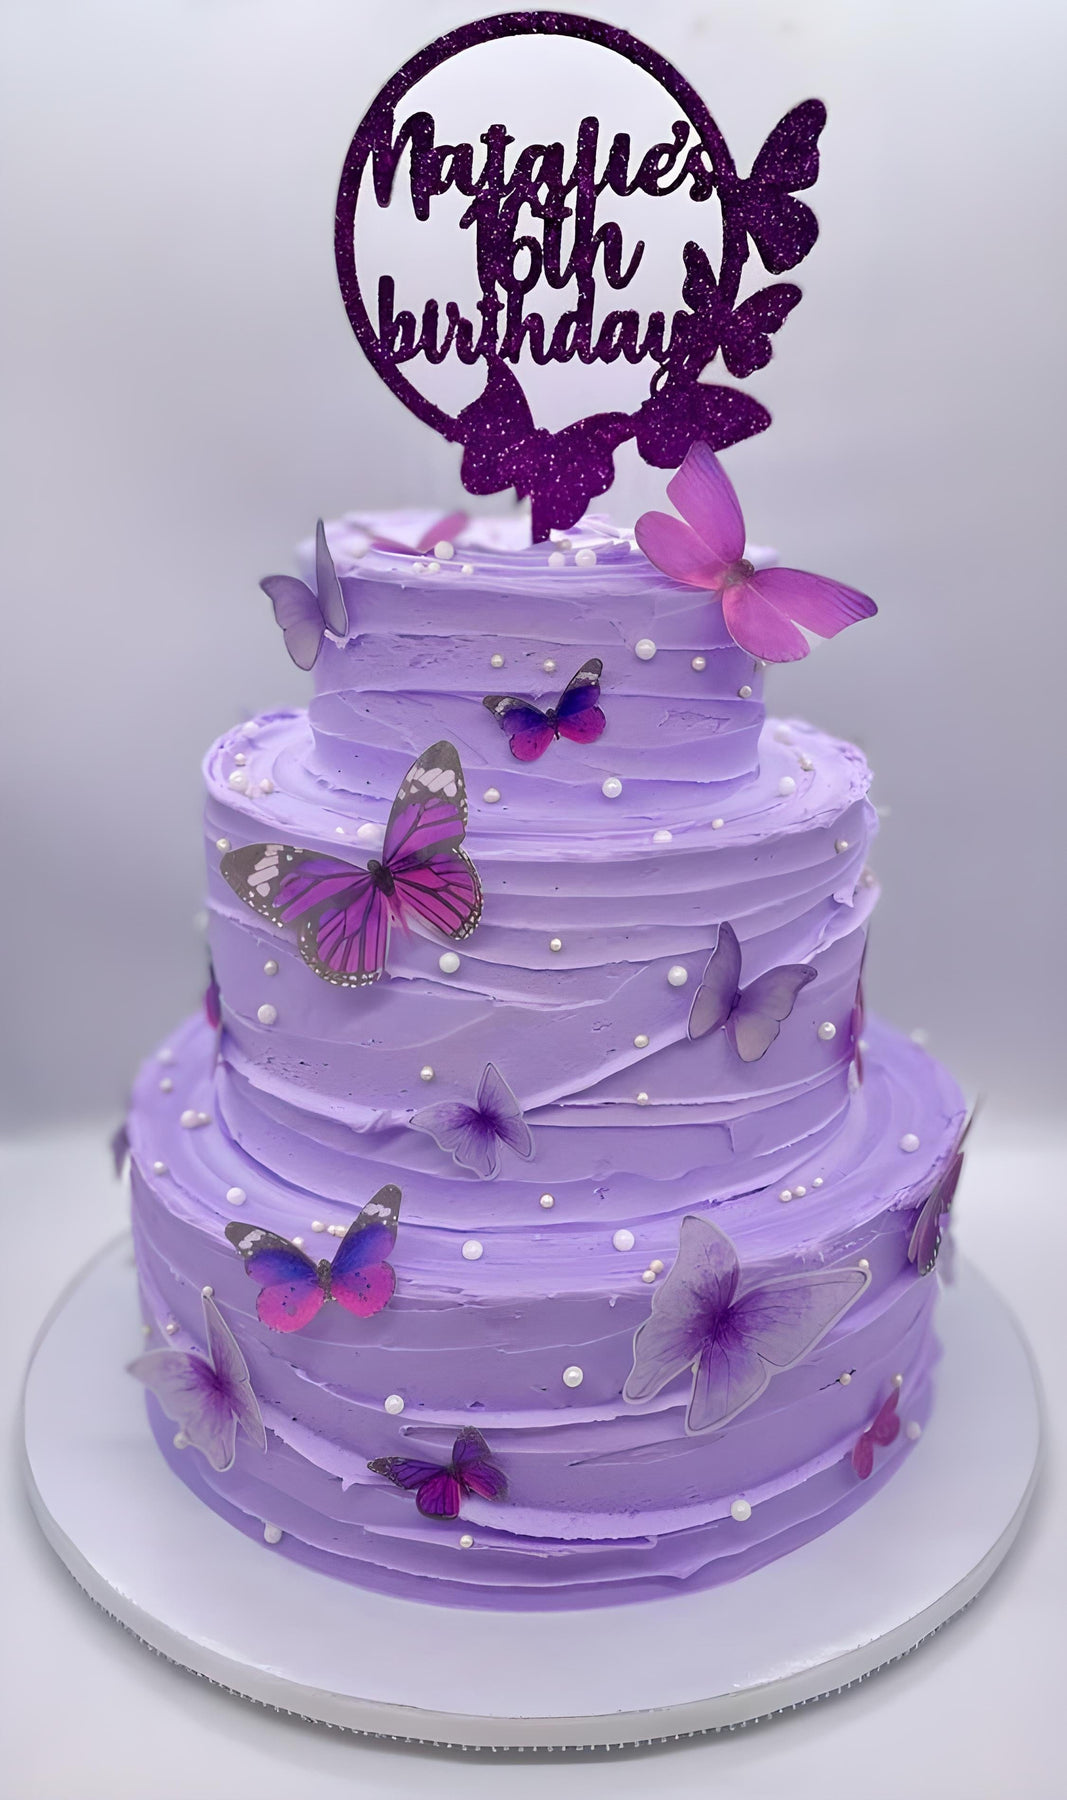 3 Tier Wedding Cake with Pink  Purple Fondant Flowers